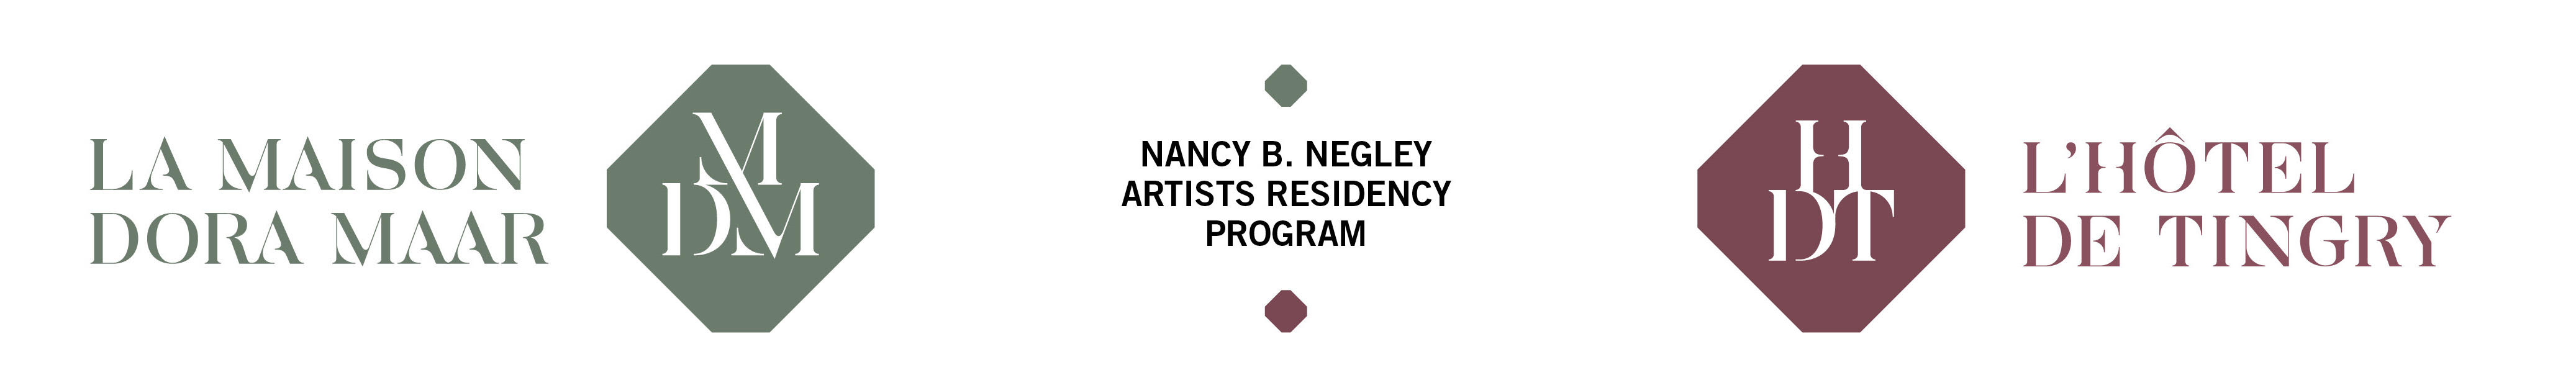 Nancy B Negley Artists Residency Program logo